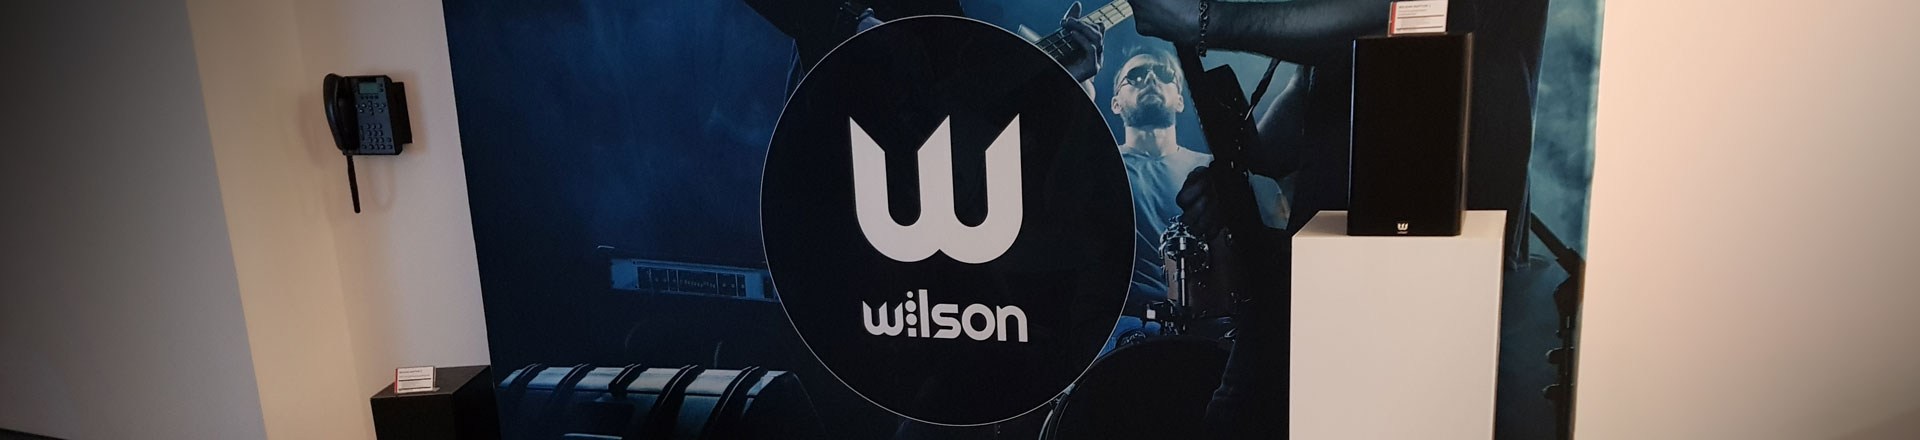 WILSON - Denon Store for Games